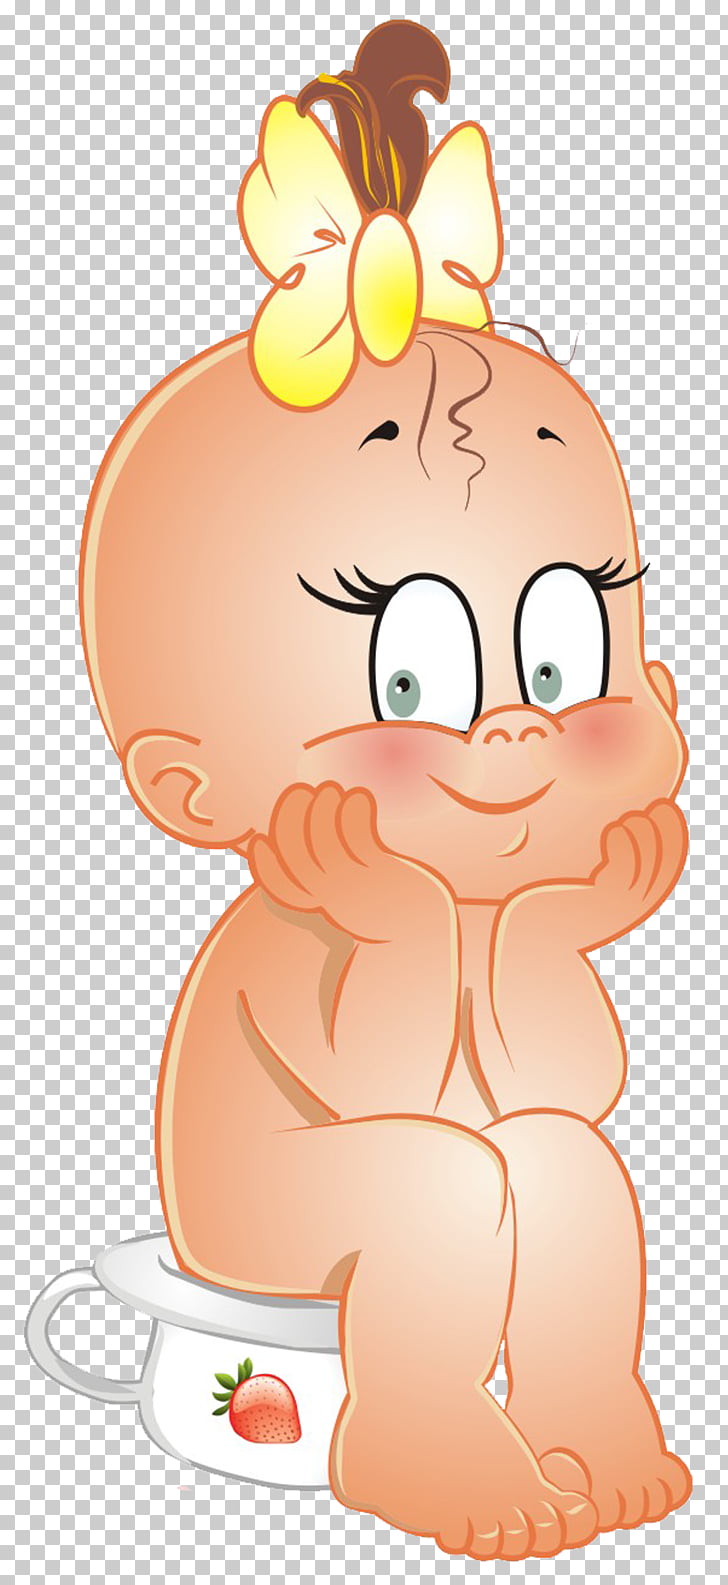 Infant cartoon baby.